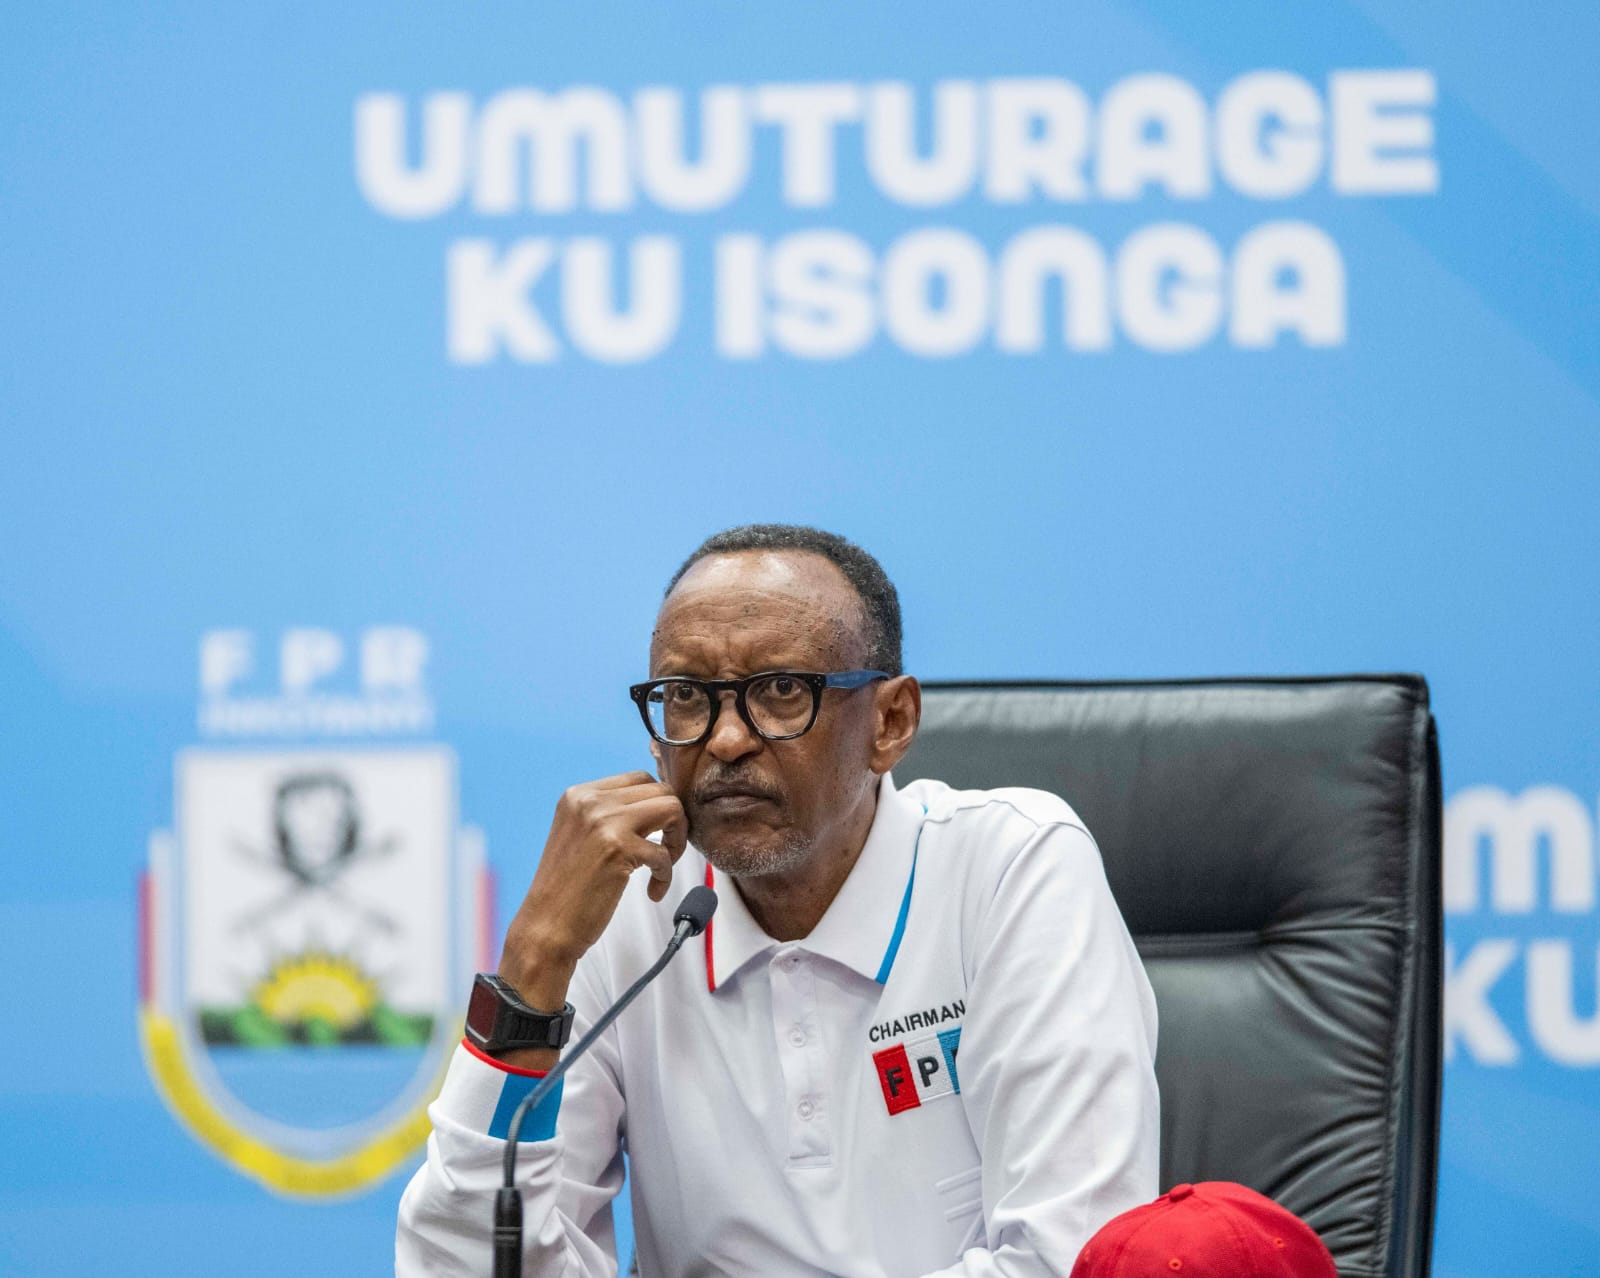 President Kagame optimistic about Rwanda’s future leadership